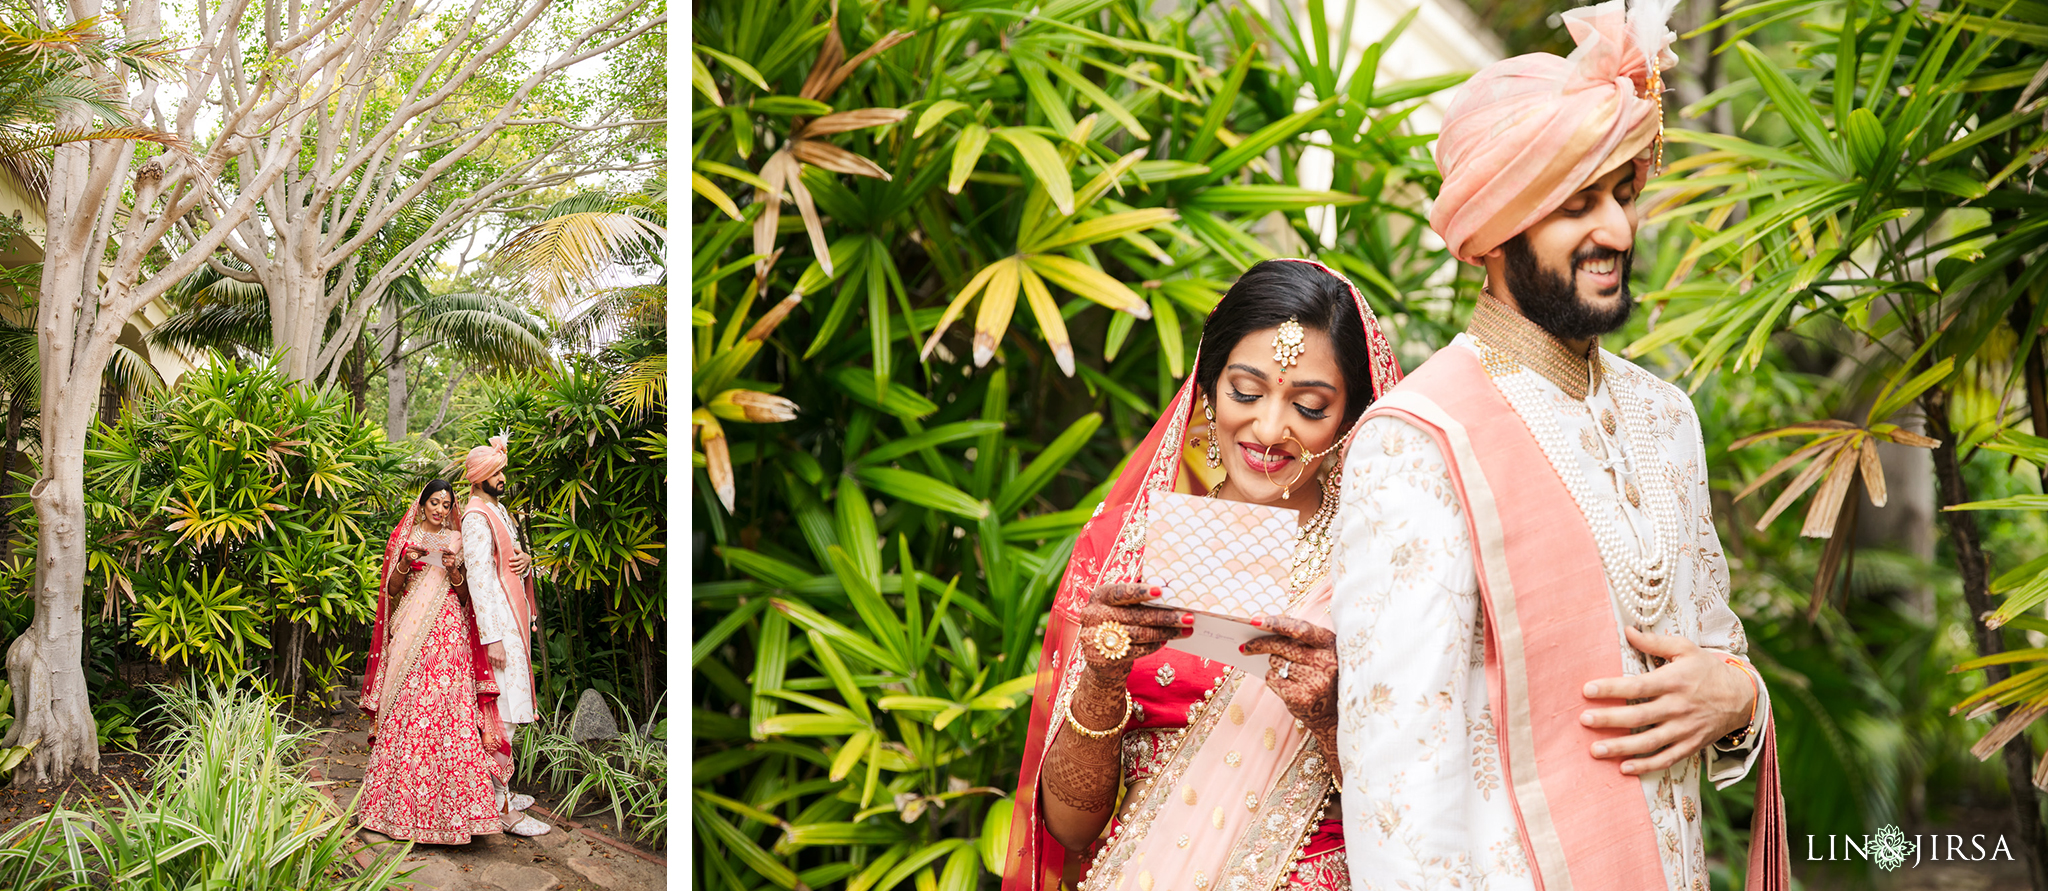 13 Ritz Carlton Laguna Niguel Indian Wedding Photography